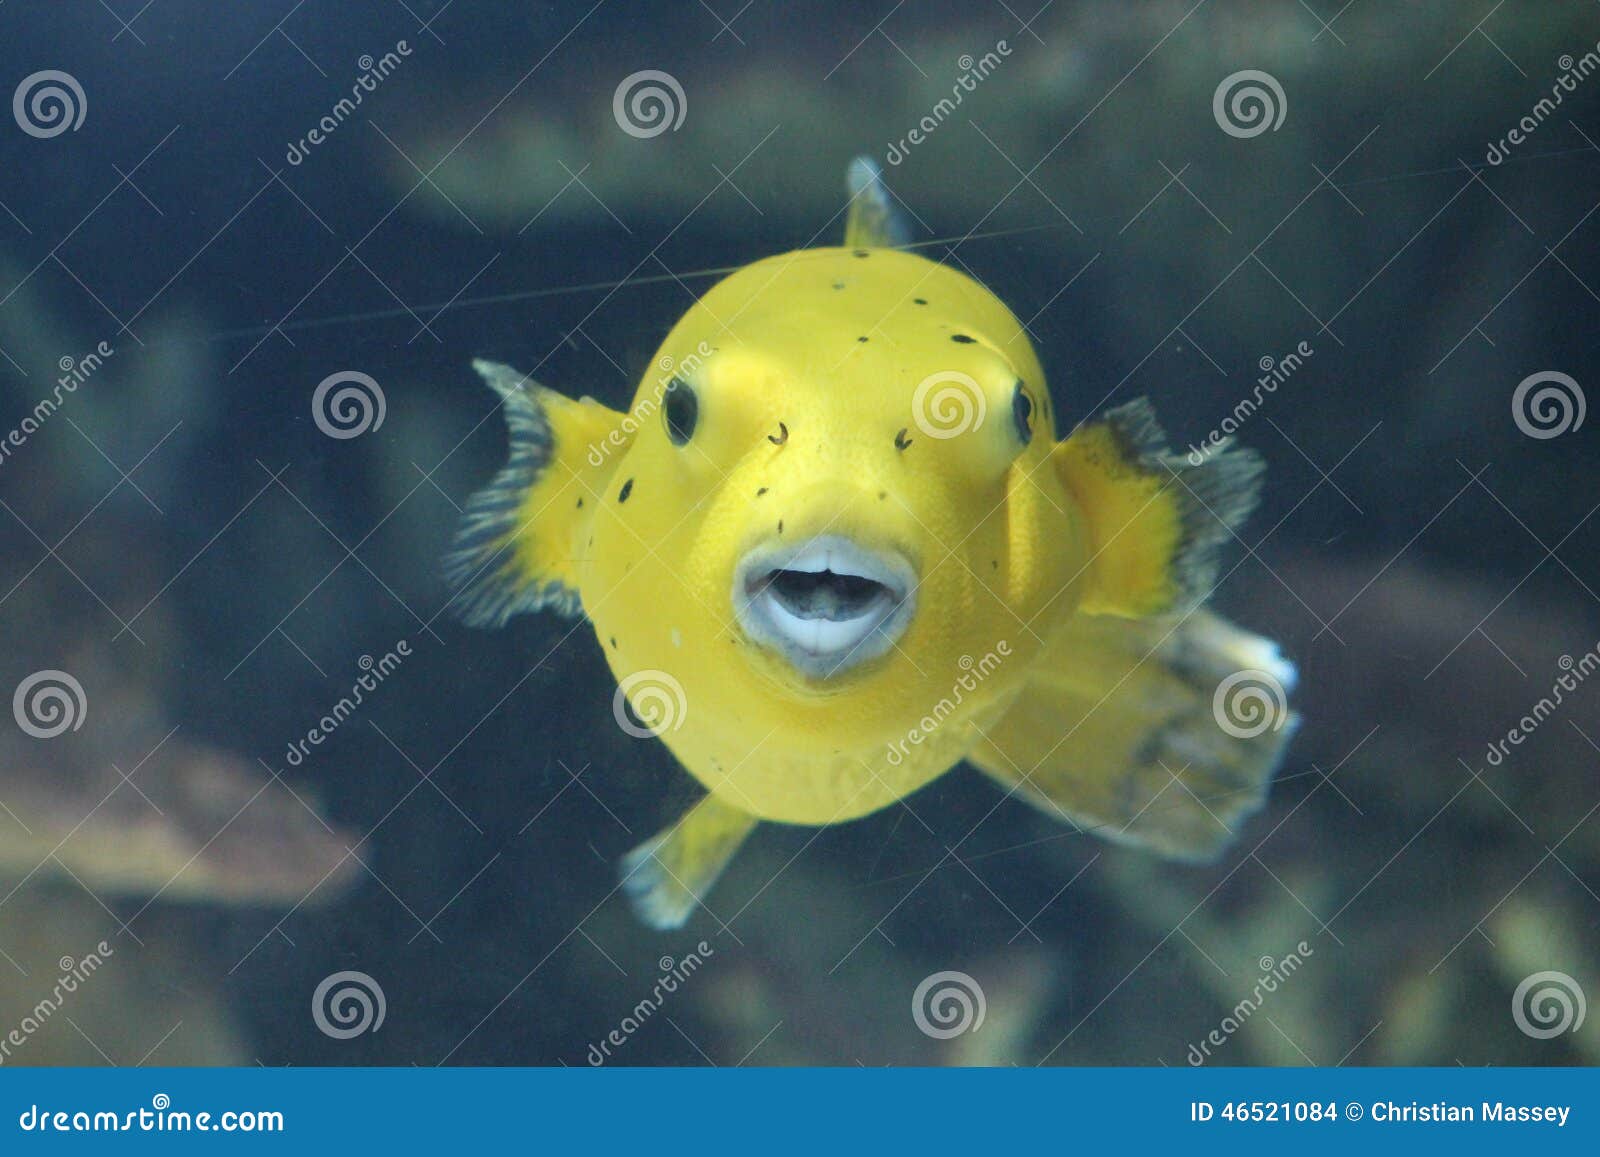 Dog Face puffer fish stock photo. Image of swimming, yellow - 46521084